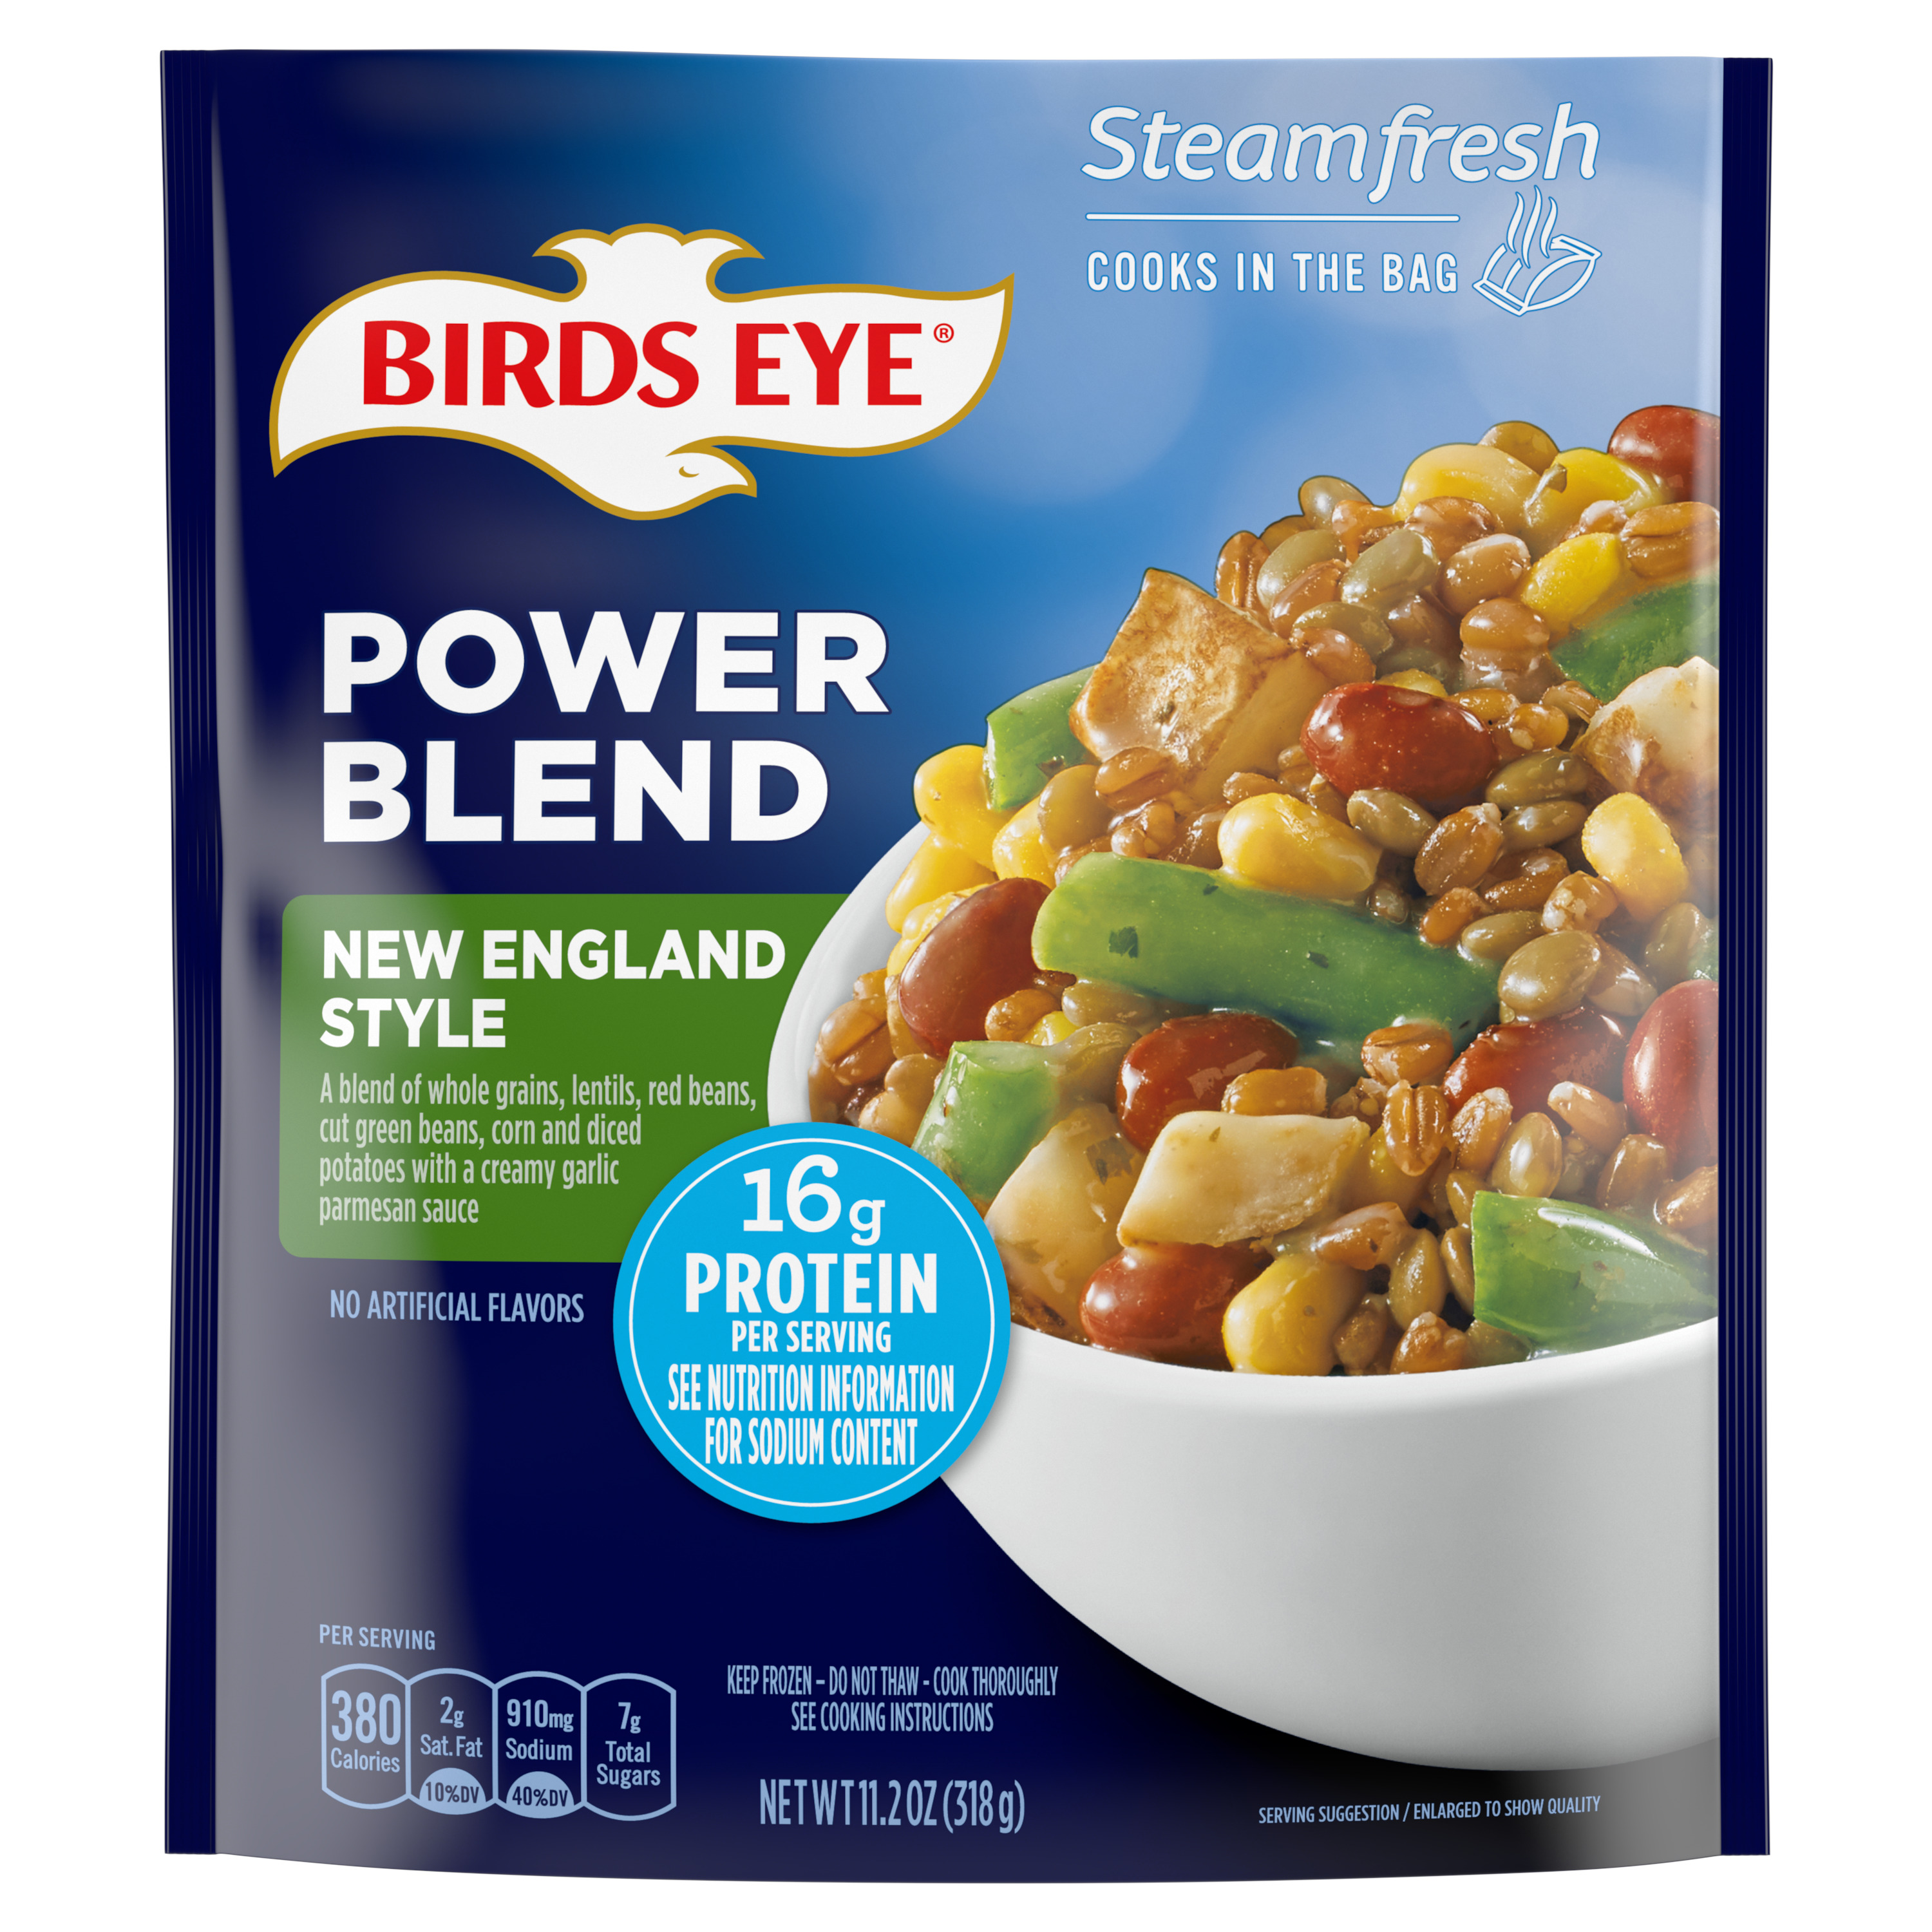 Birds Eye Steamfresh Protein Blends New England Style